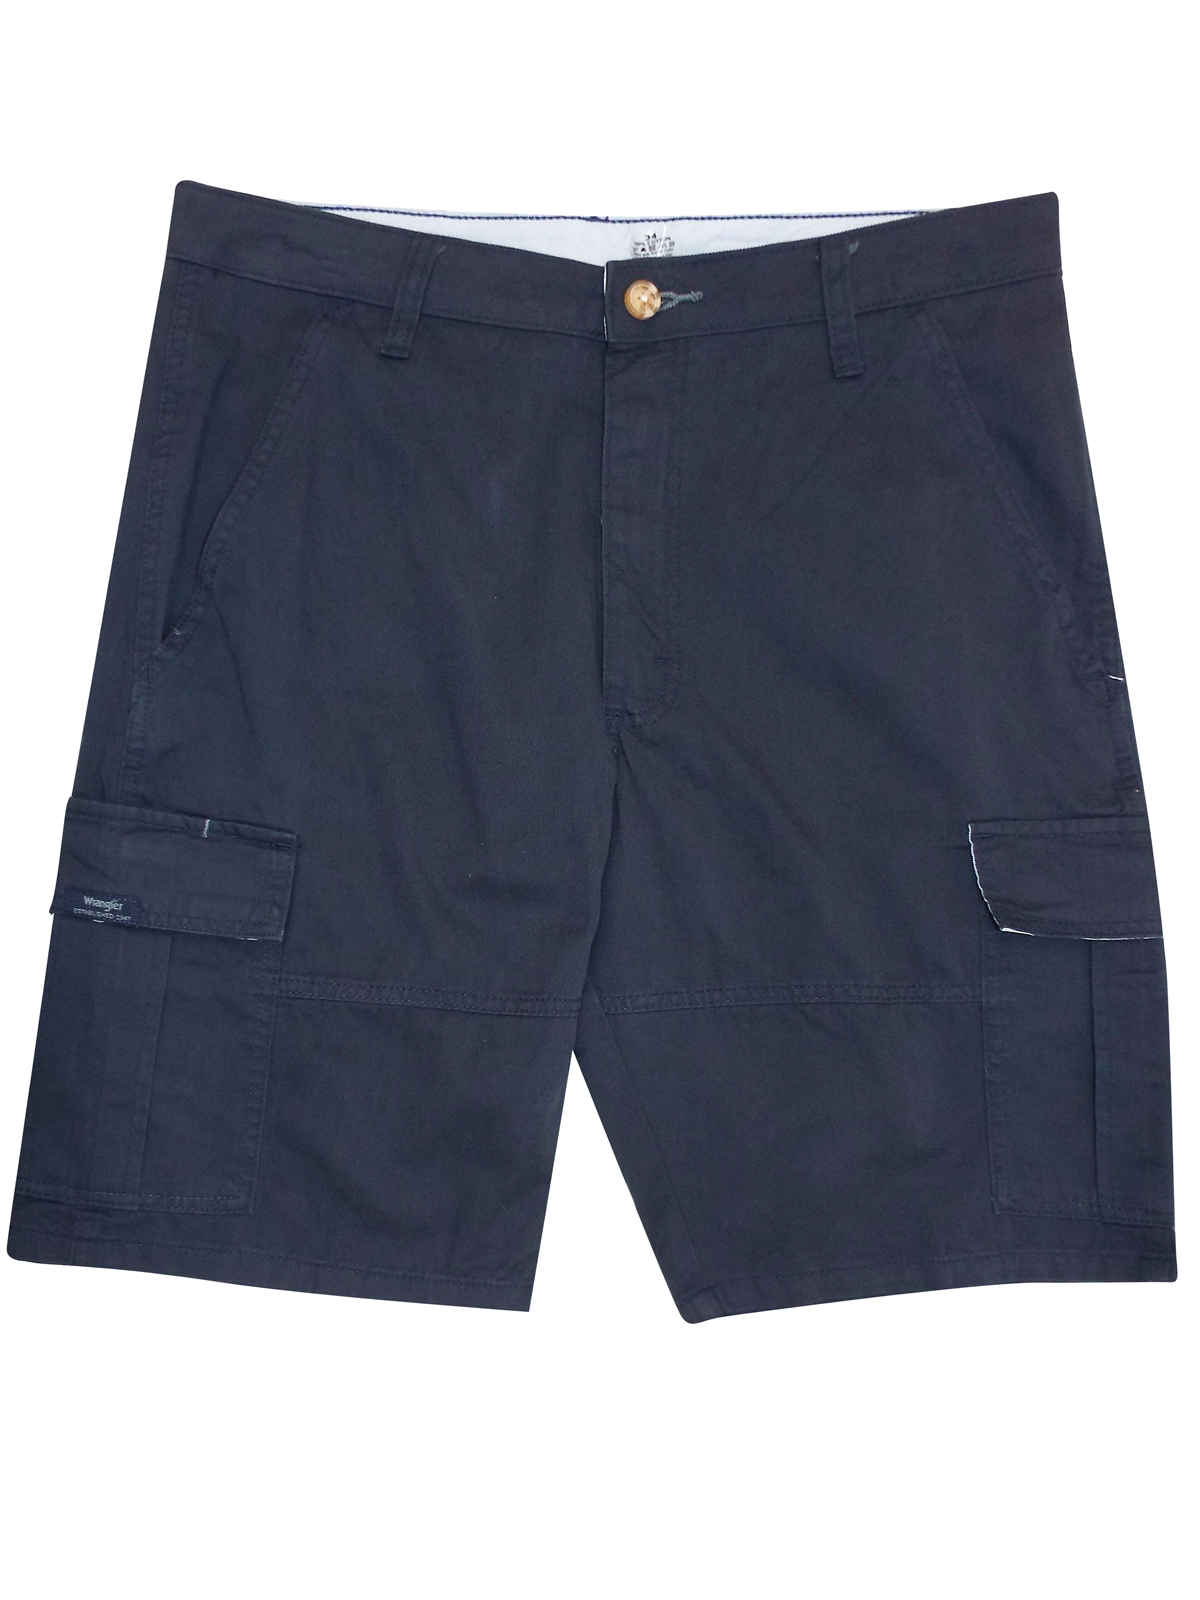 Wrangler - - Wr4ngler Mens NAVY Classic Twill Cargo Shorts - Waist Size ...